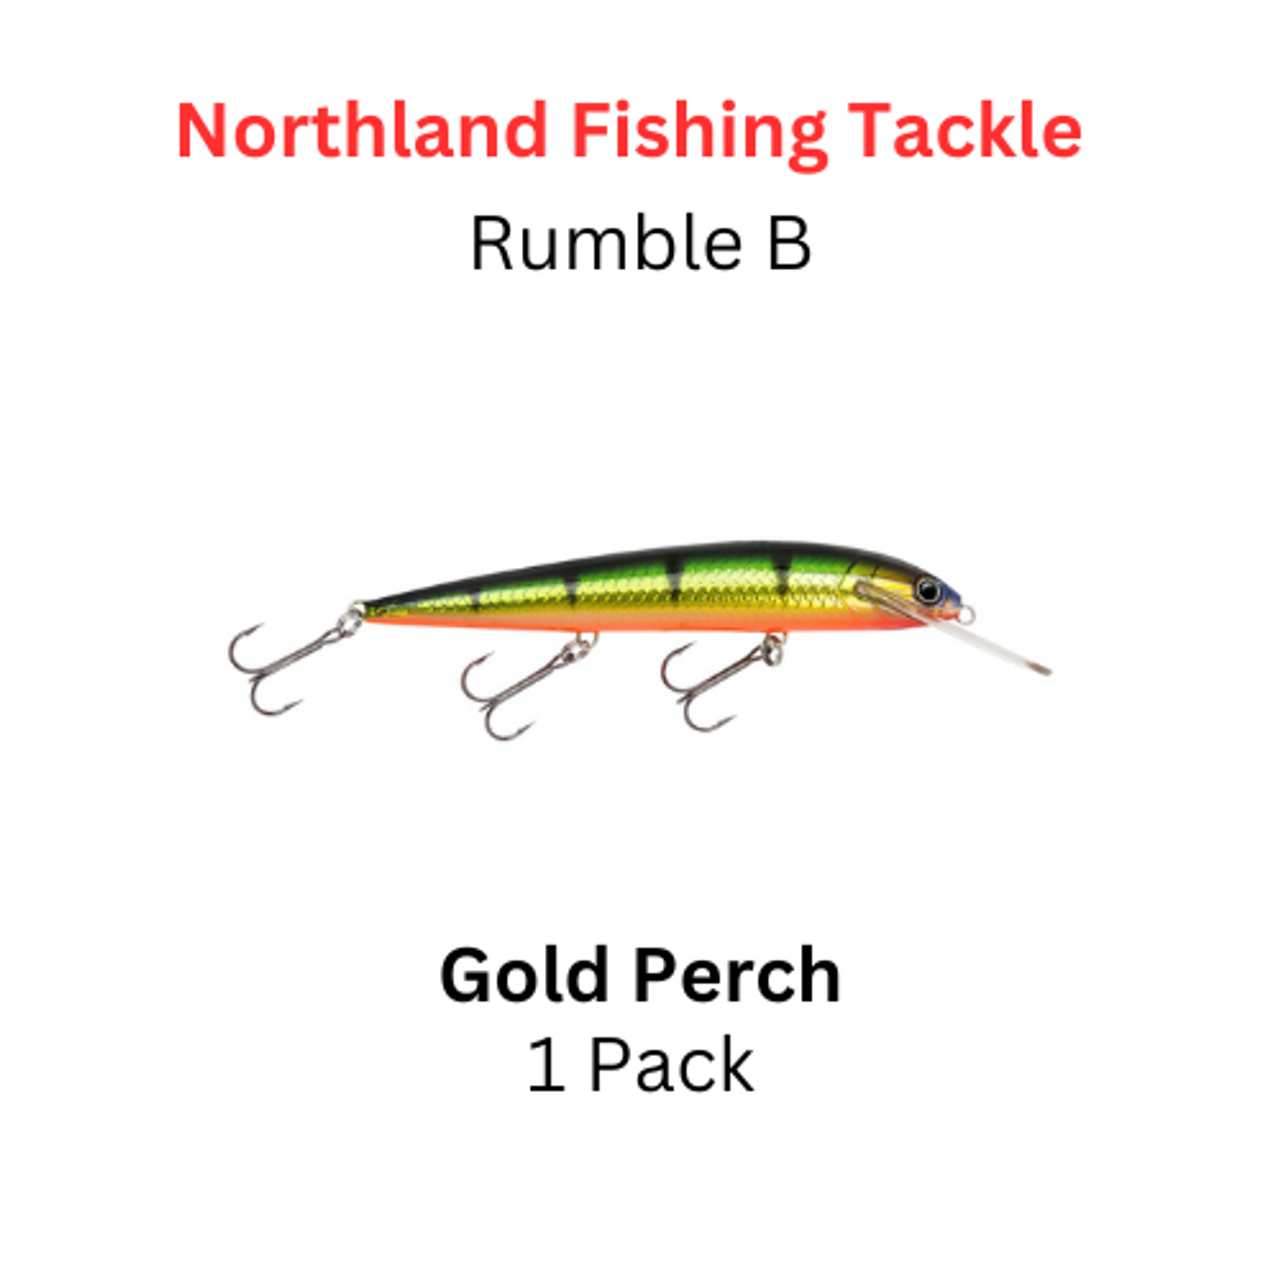 Northland Fishing tackle: Rumble B size 13 wonderbread